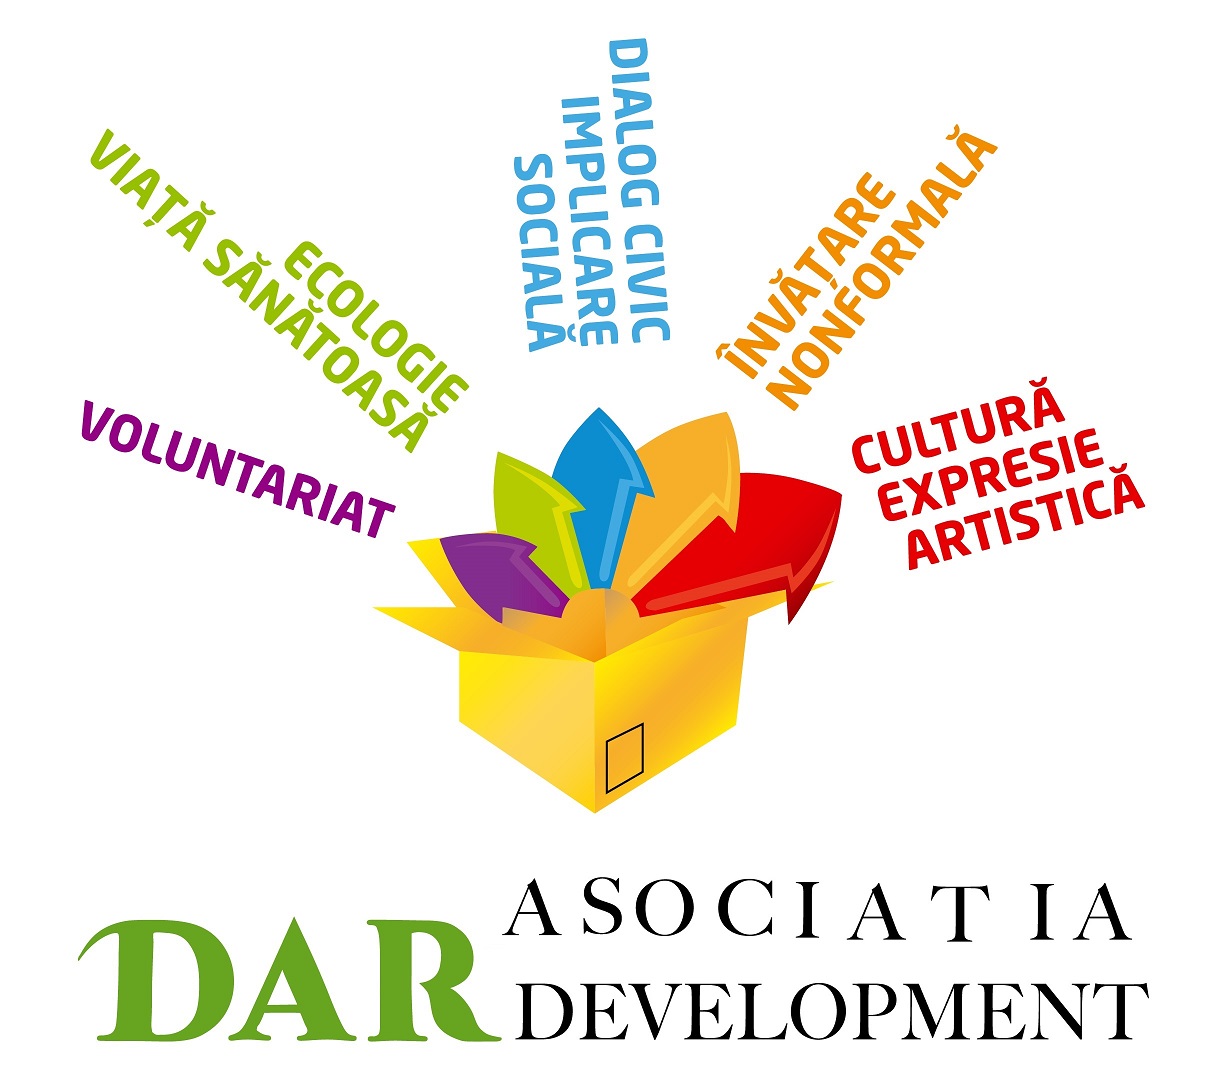 Dar Association